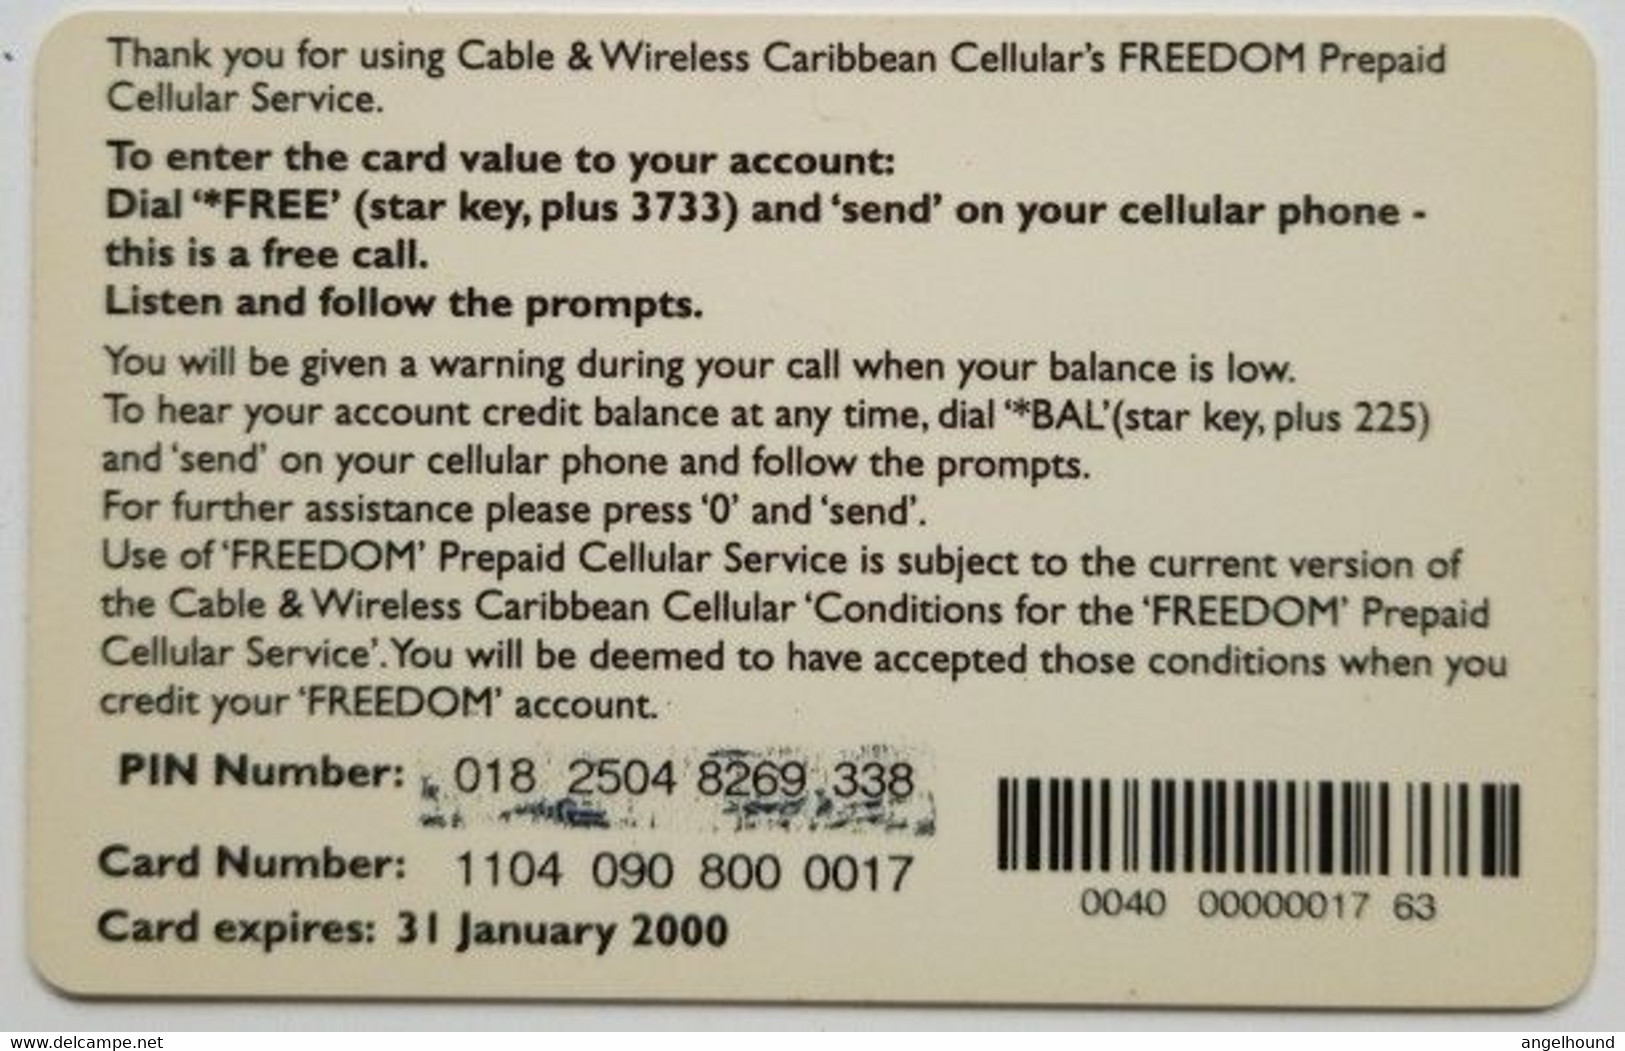 Caribbean Phonecard EC$40 Freedom Cellular - St. Vincent & The Grenadines